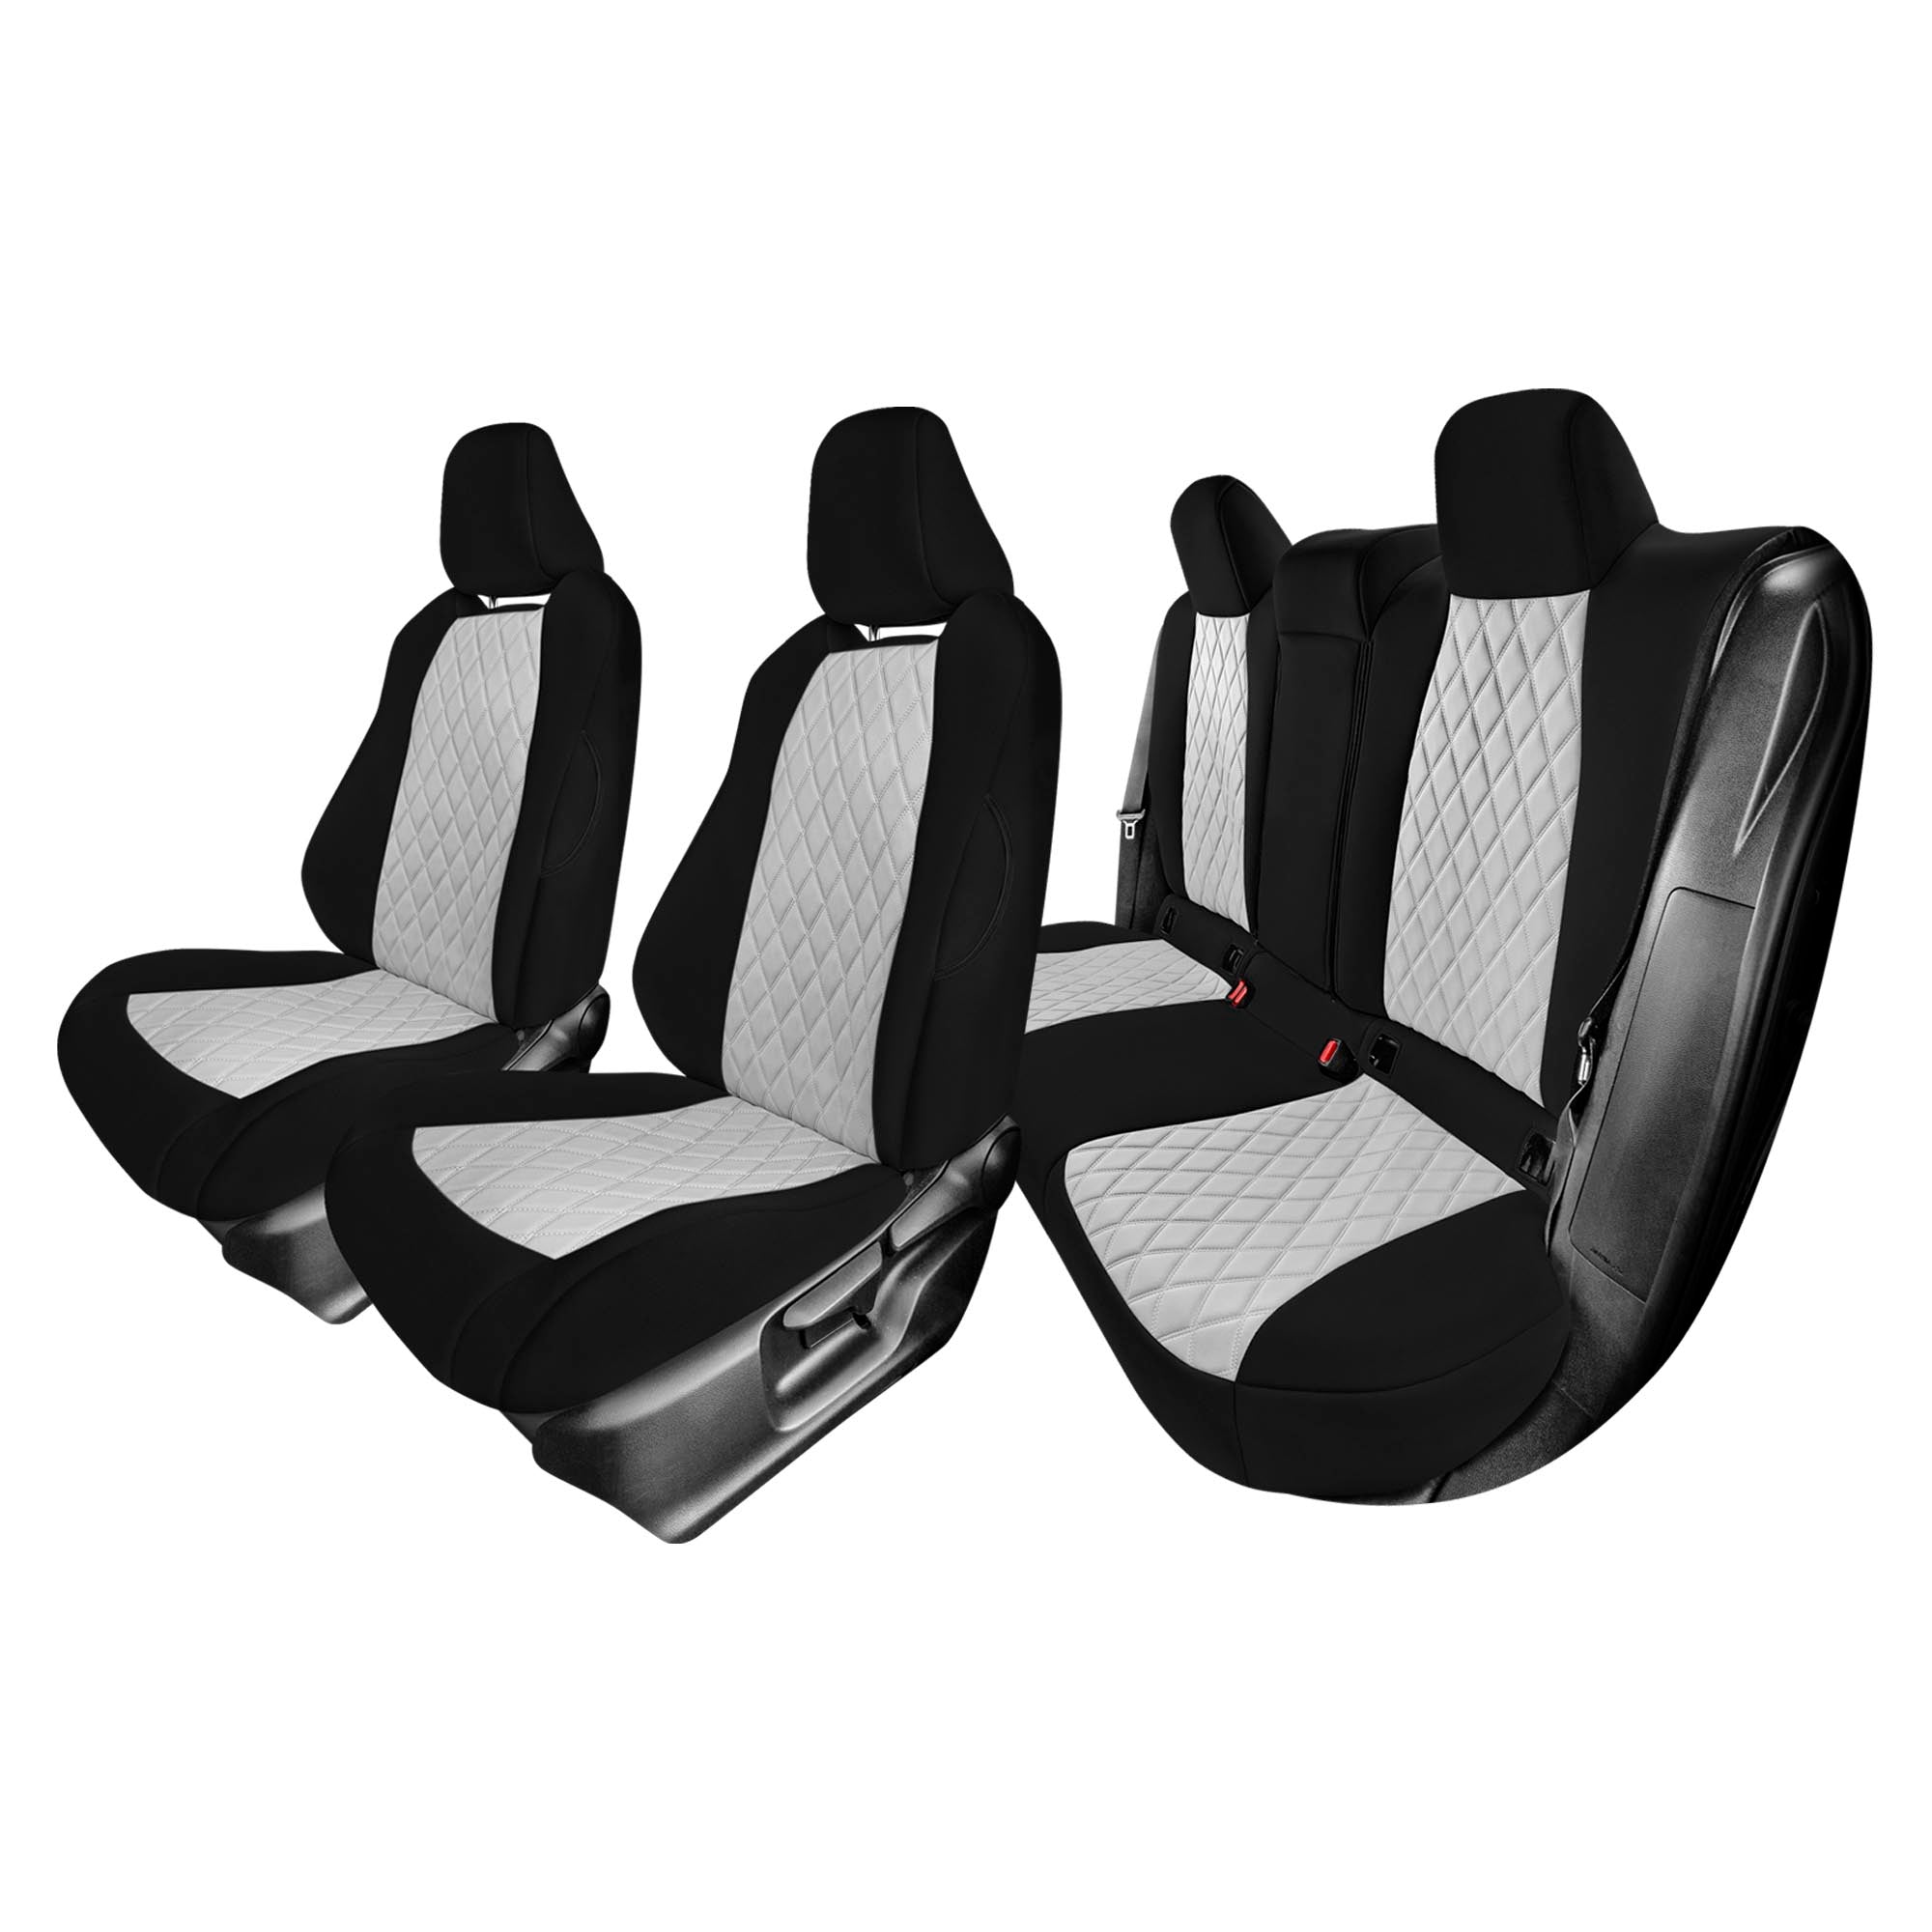 Toyota Corolla - 2020-2024 - Full Set Seat Covers - Gray Ultraflex Neoprene